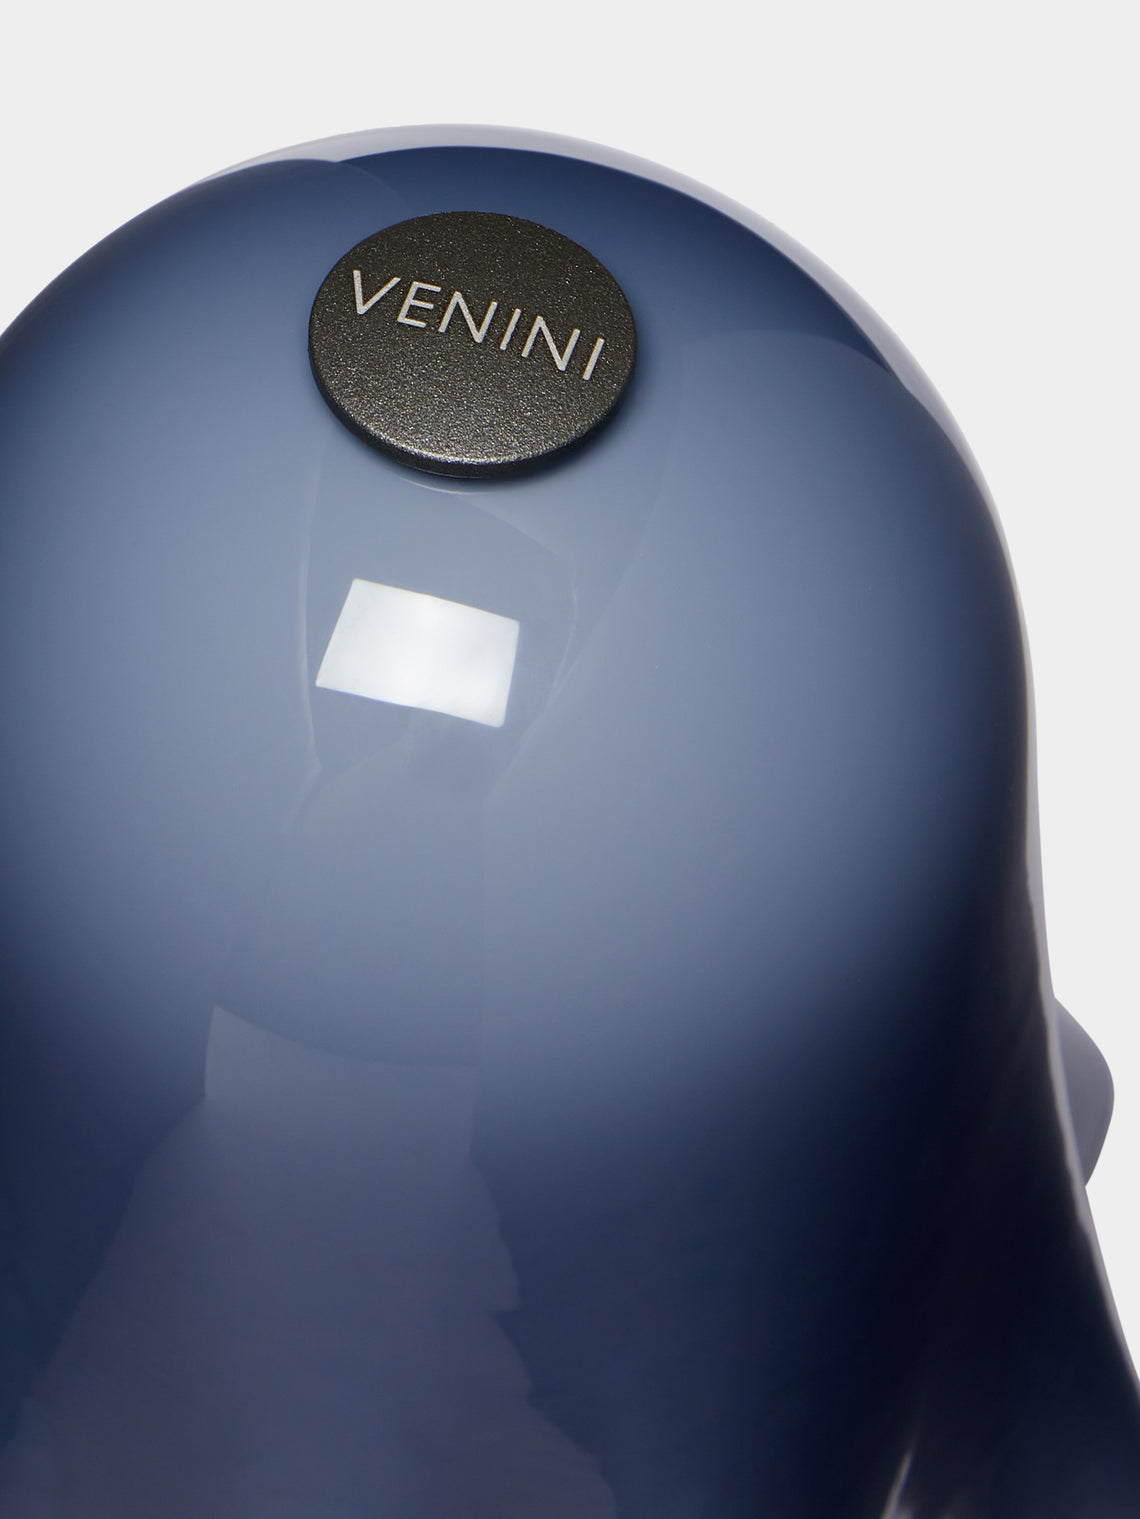 Venini - Fantasmino Hand-Blown Murano Glass Portable Lamp -  - ABASK